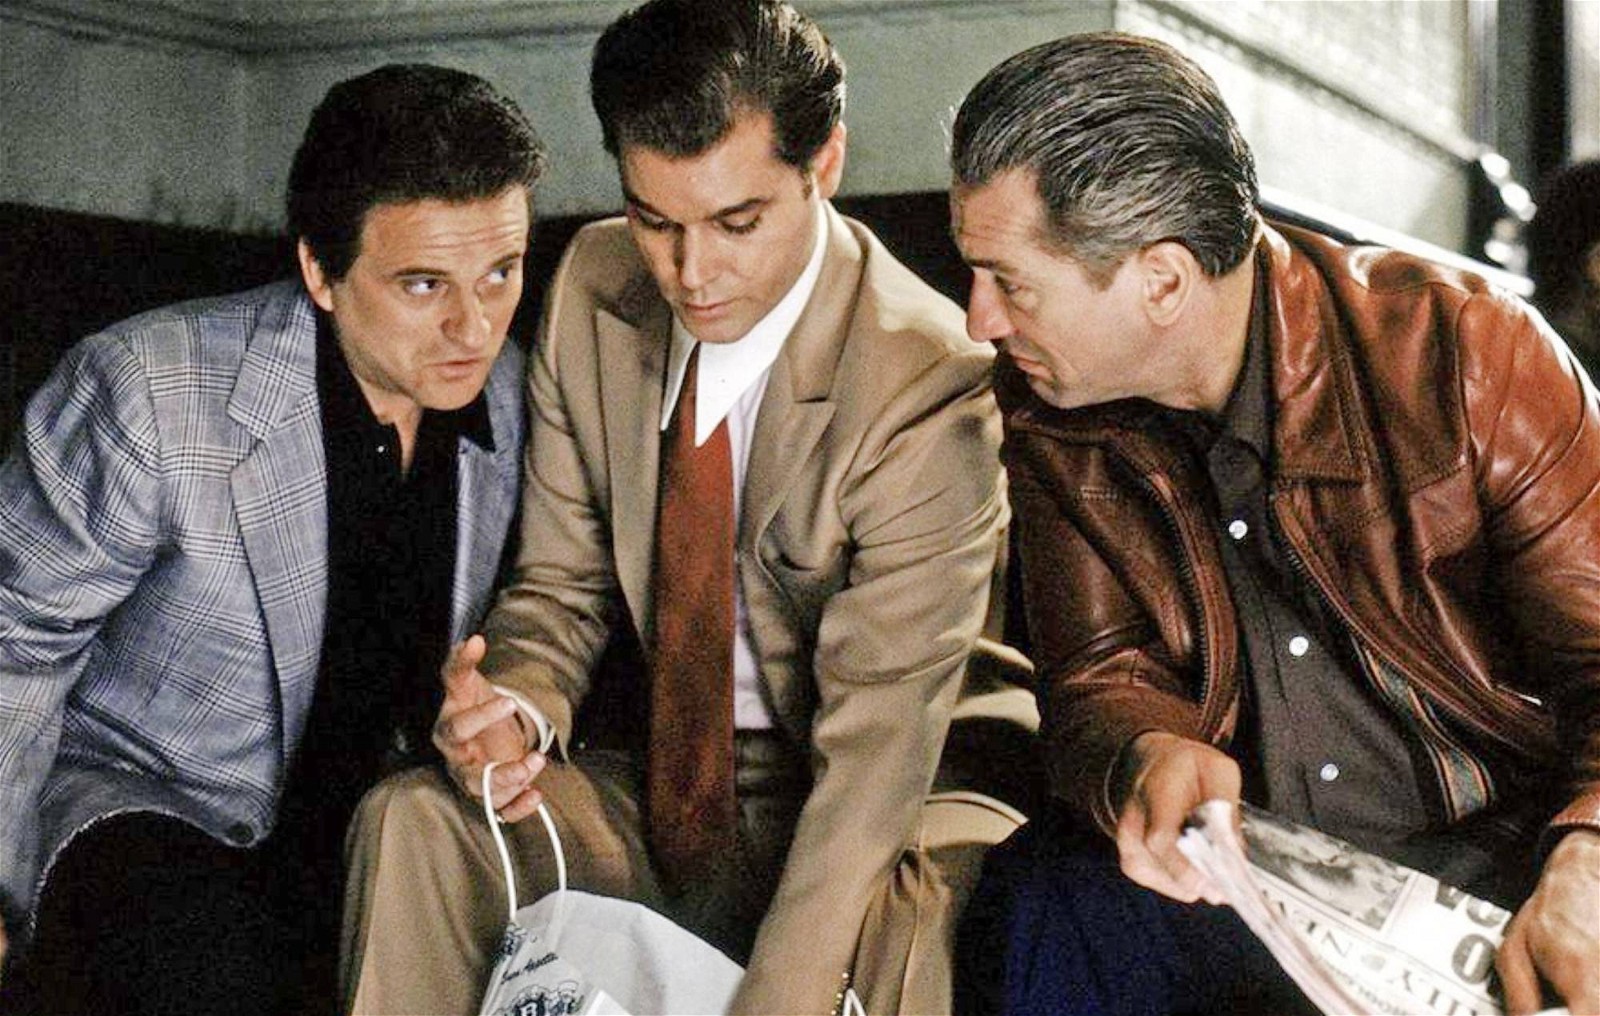 Martin Scorsese’s Goodfellas inspired The Shawshank Redemption